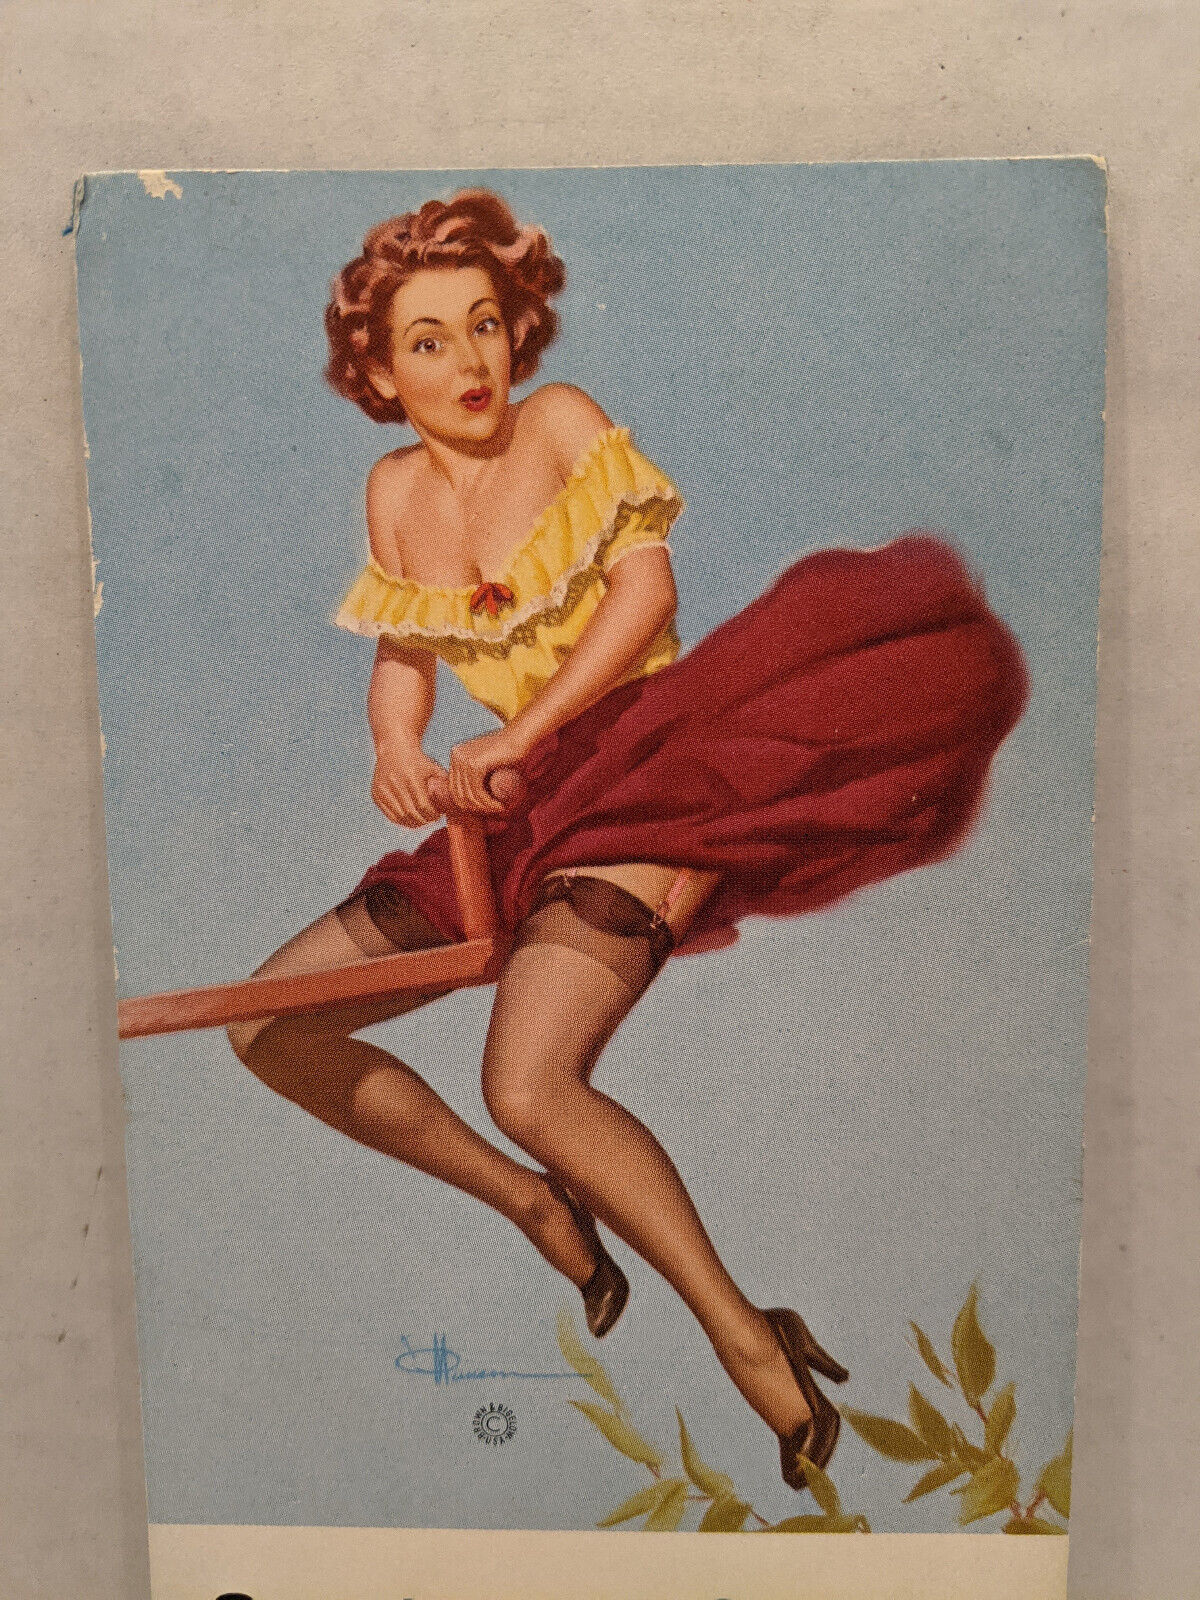 Vintage 1952 Pin Up Girl Advertising Blotter Card by Brown & Bigelow~